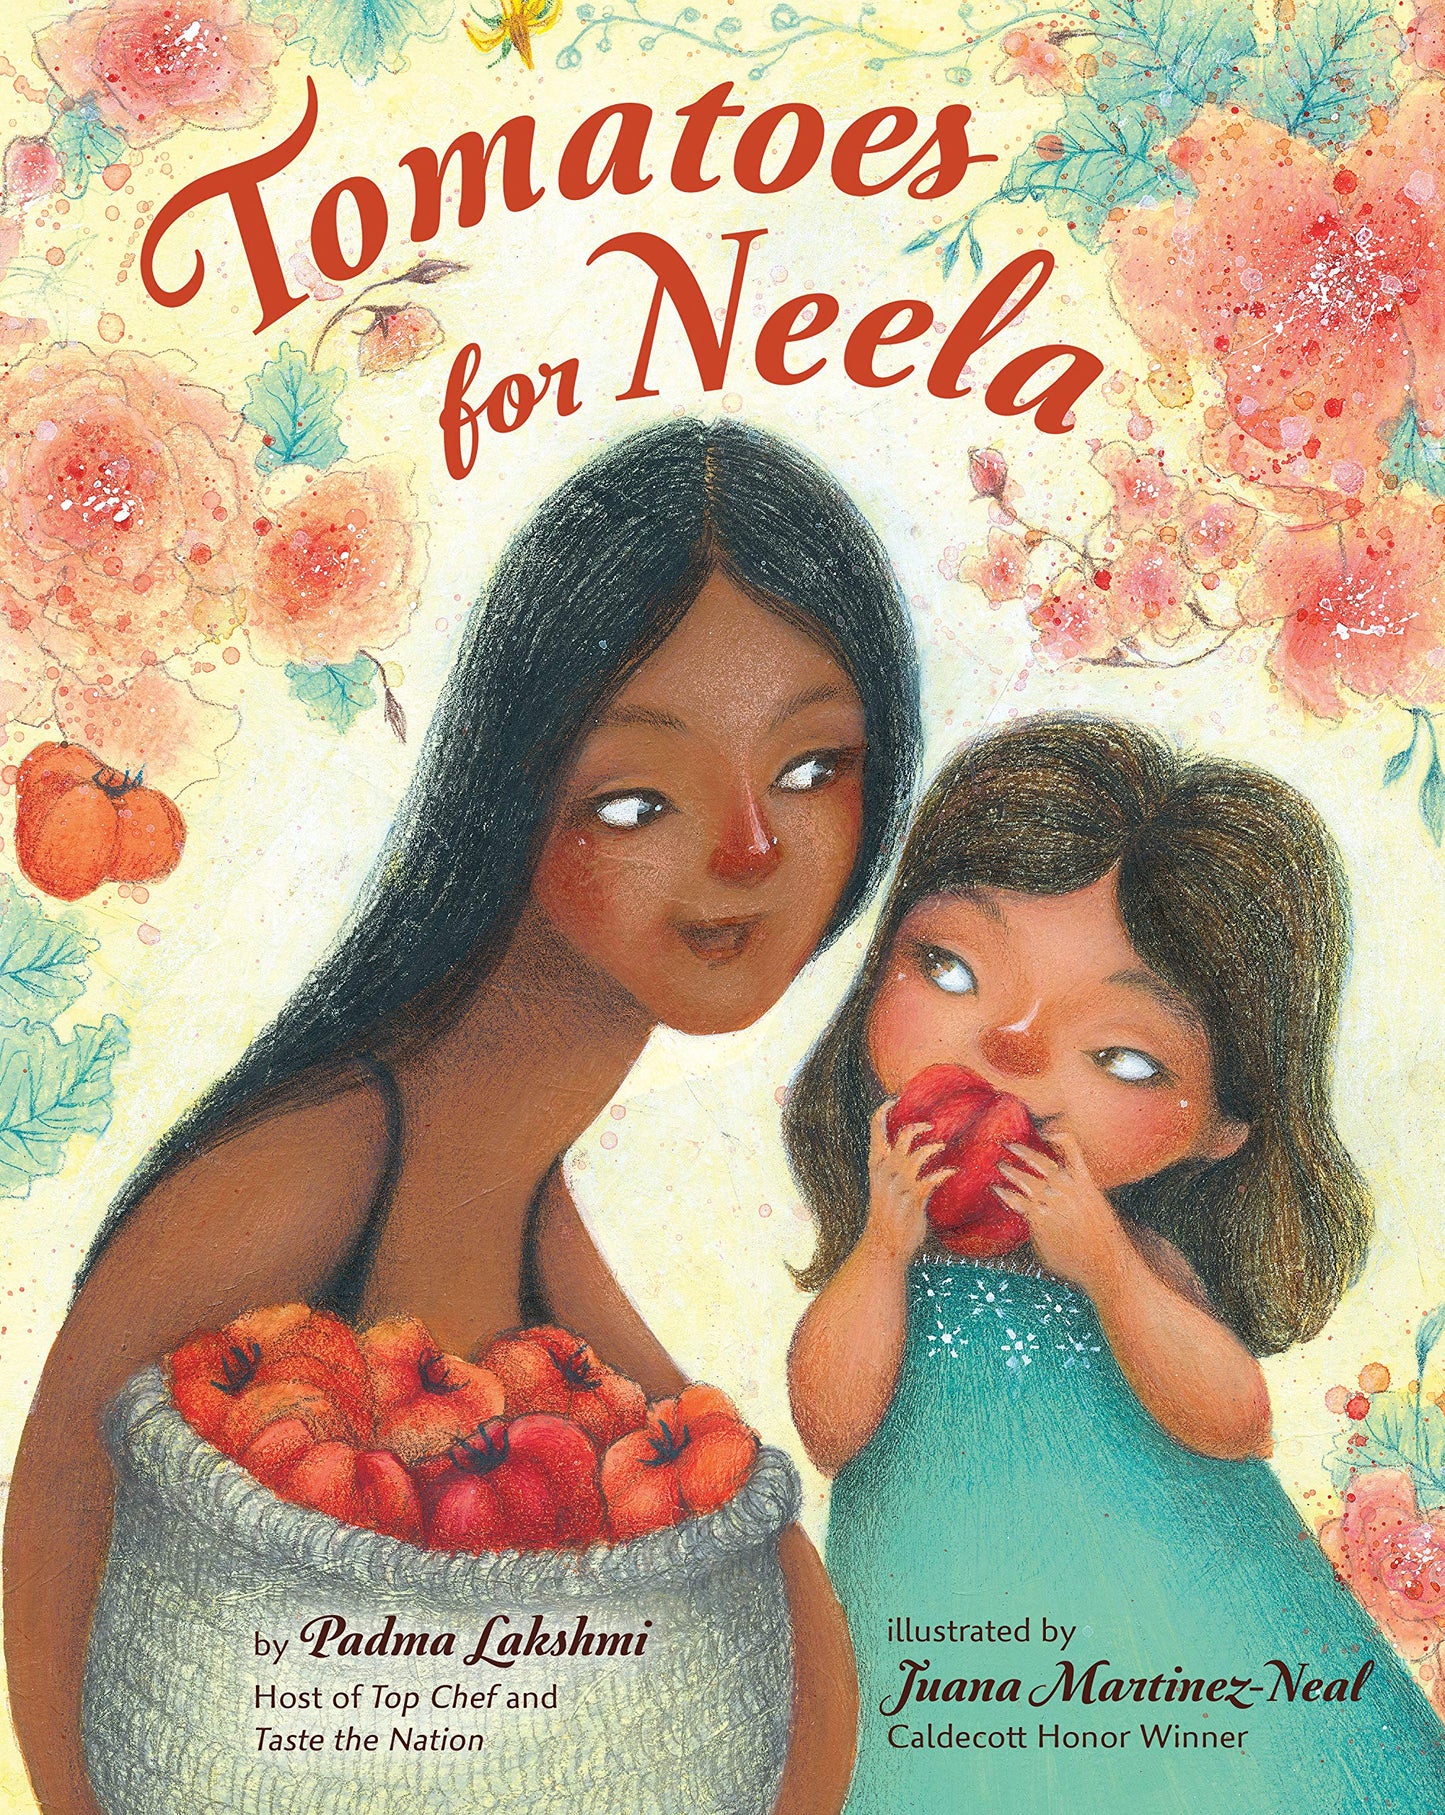 "Tomatoes for Neela" Book